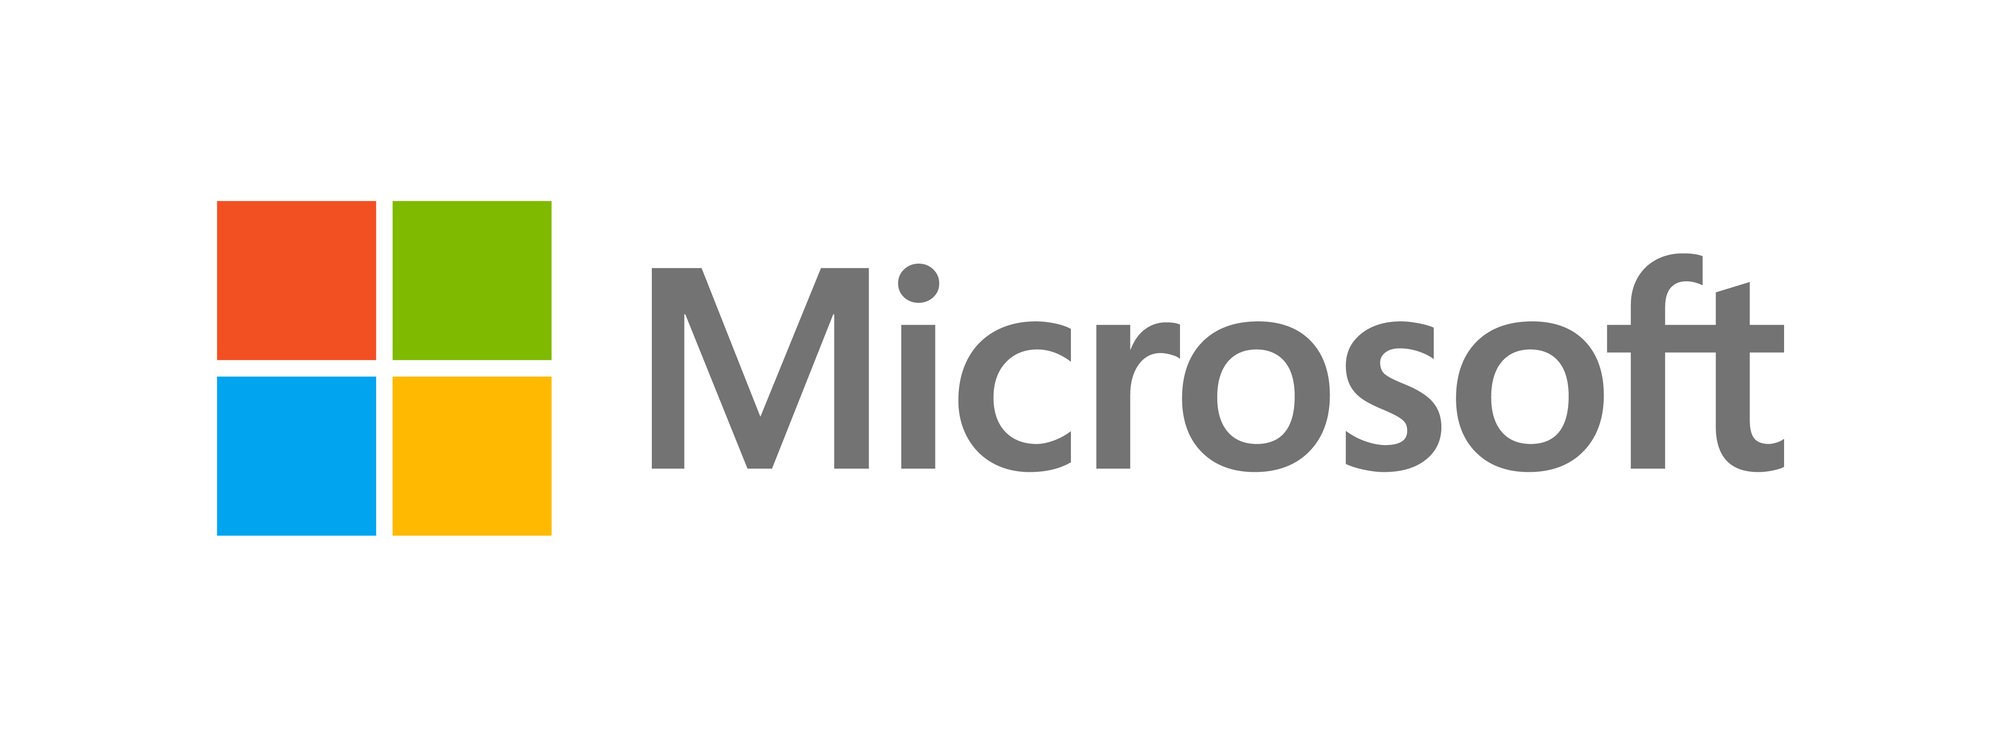 Microsoft_Logo_screen